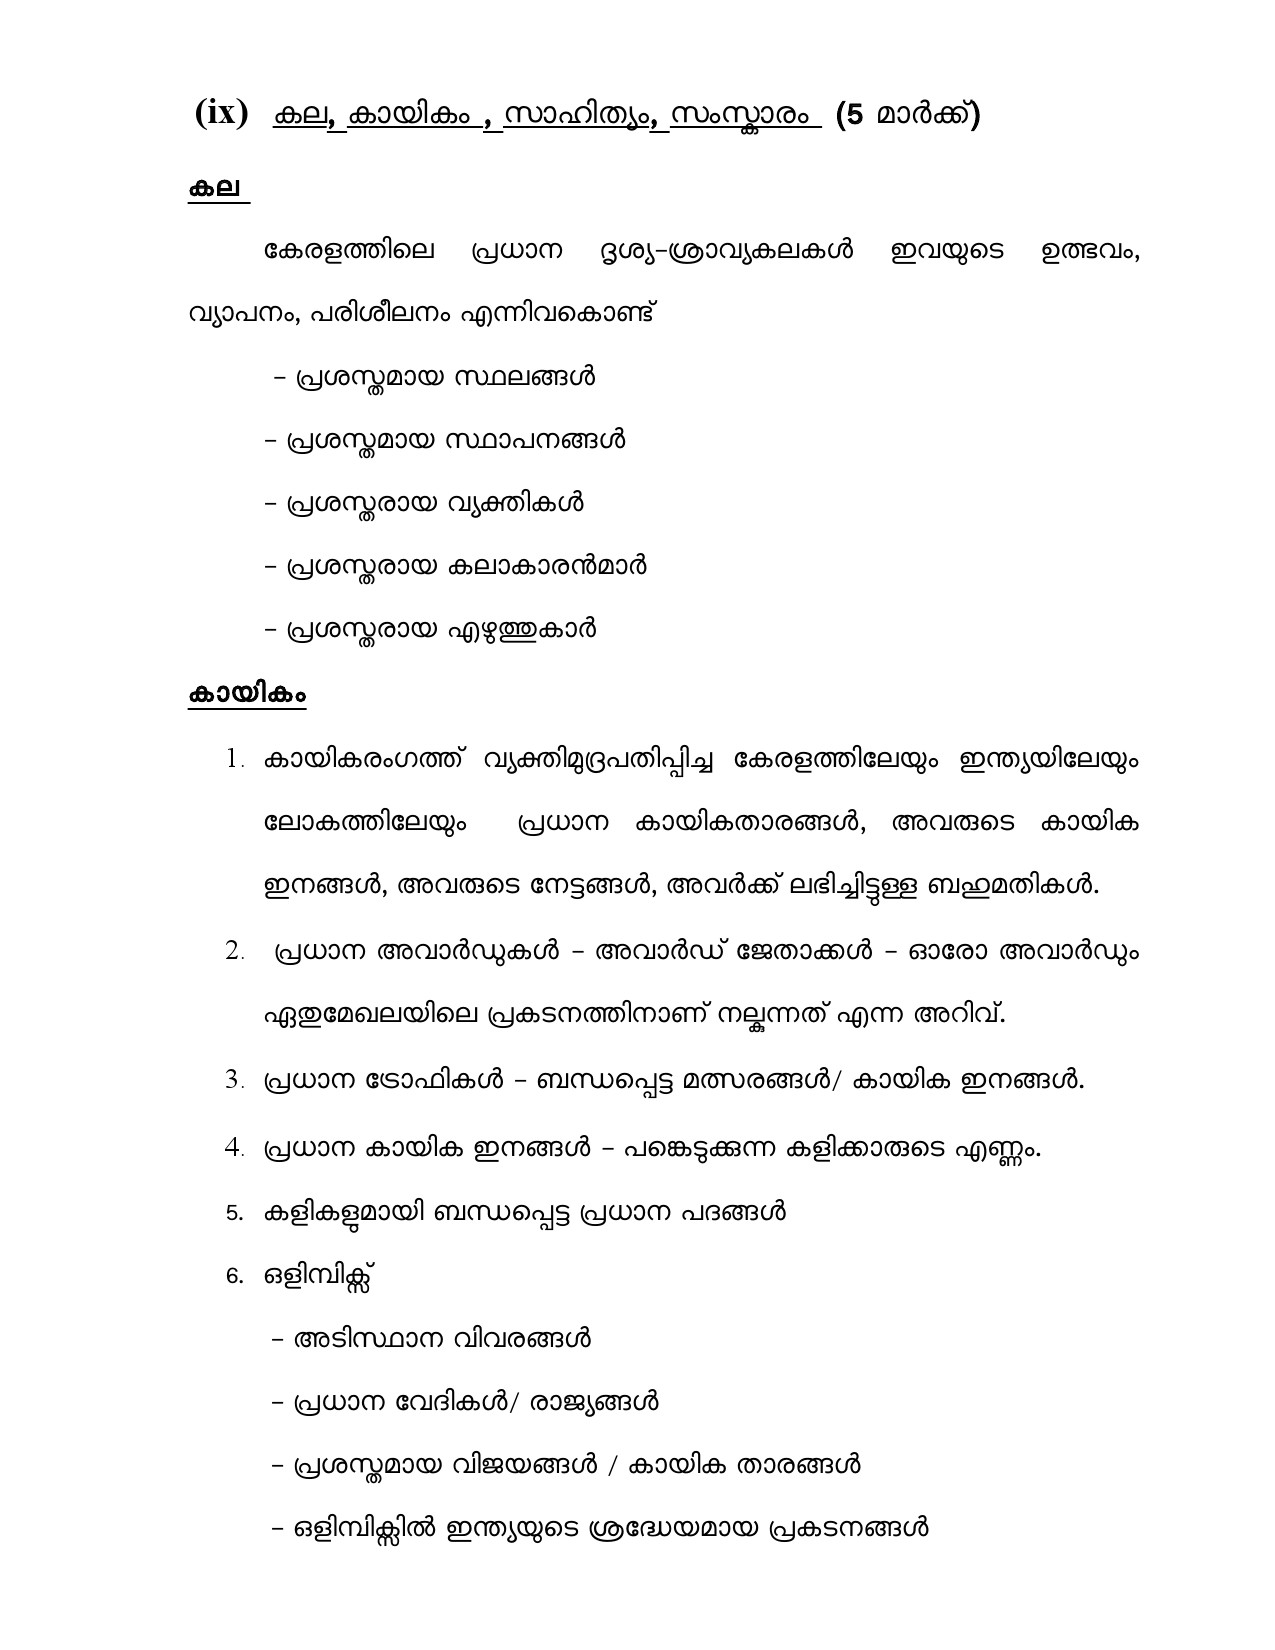 LDC Main Exam Syllabus Malayalam And English - Notification Image 6